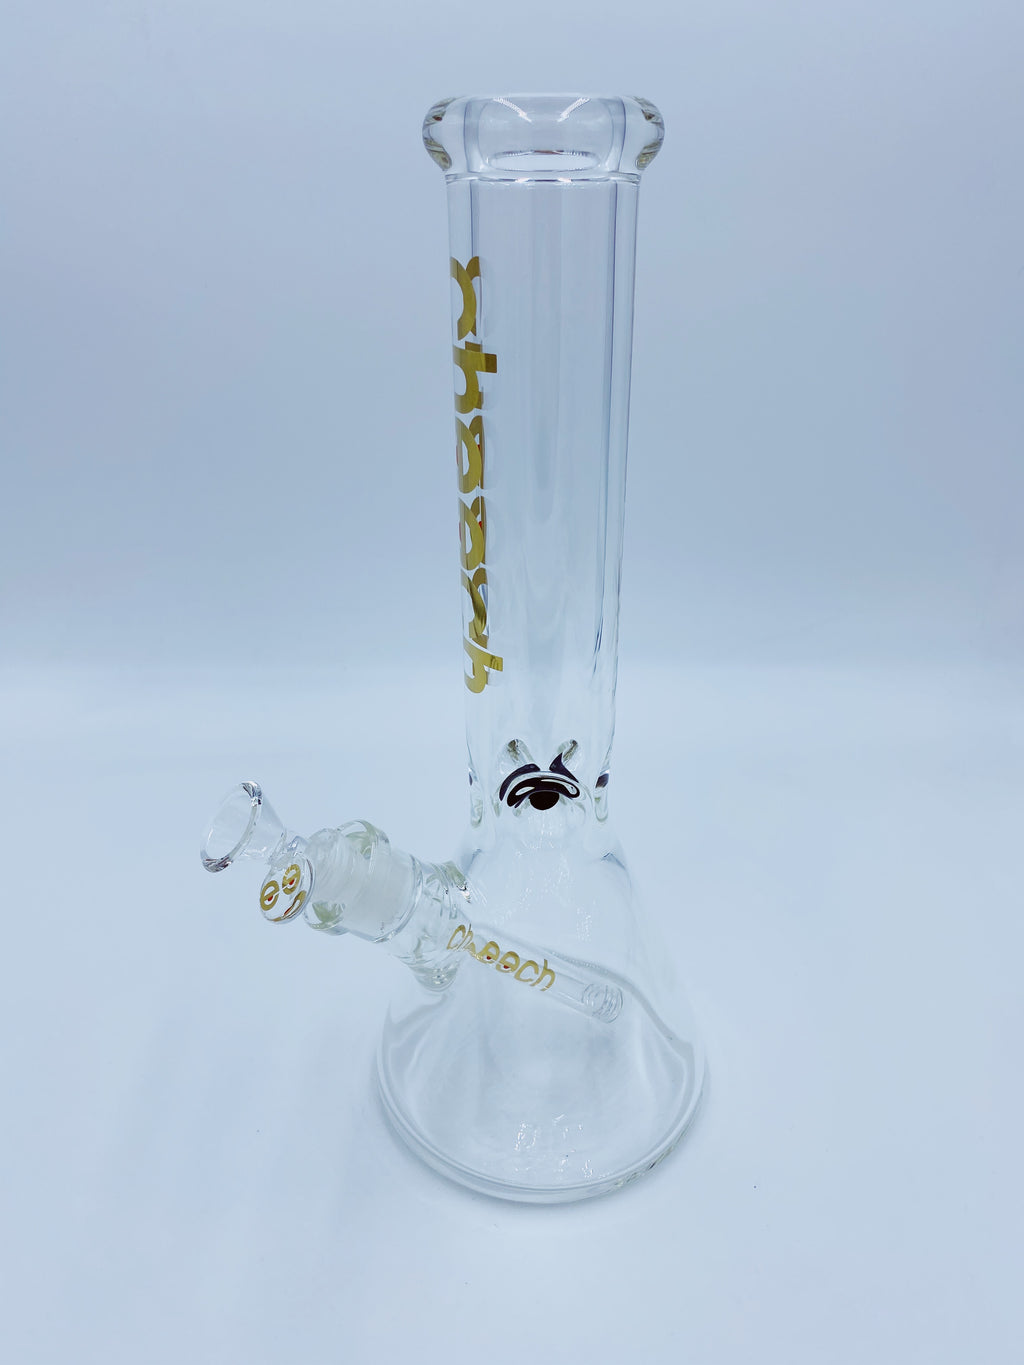 Cheech Glass 14 Inch 9mm Beaker - Smoke Country - Land of the artistic glass blown bongs